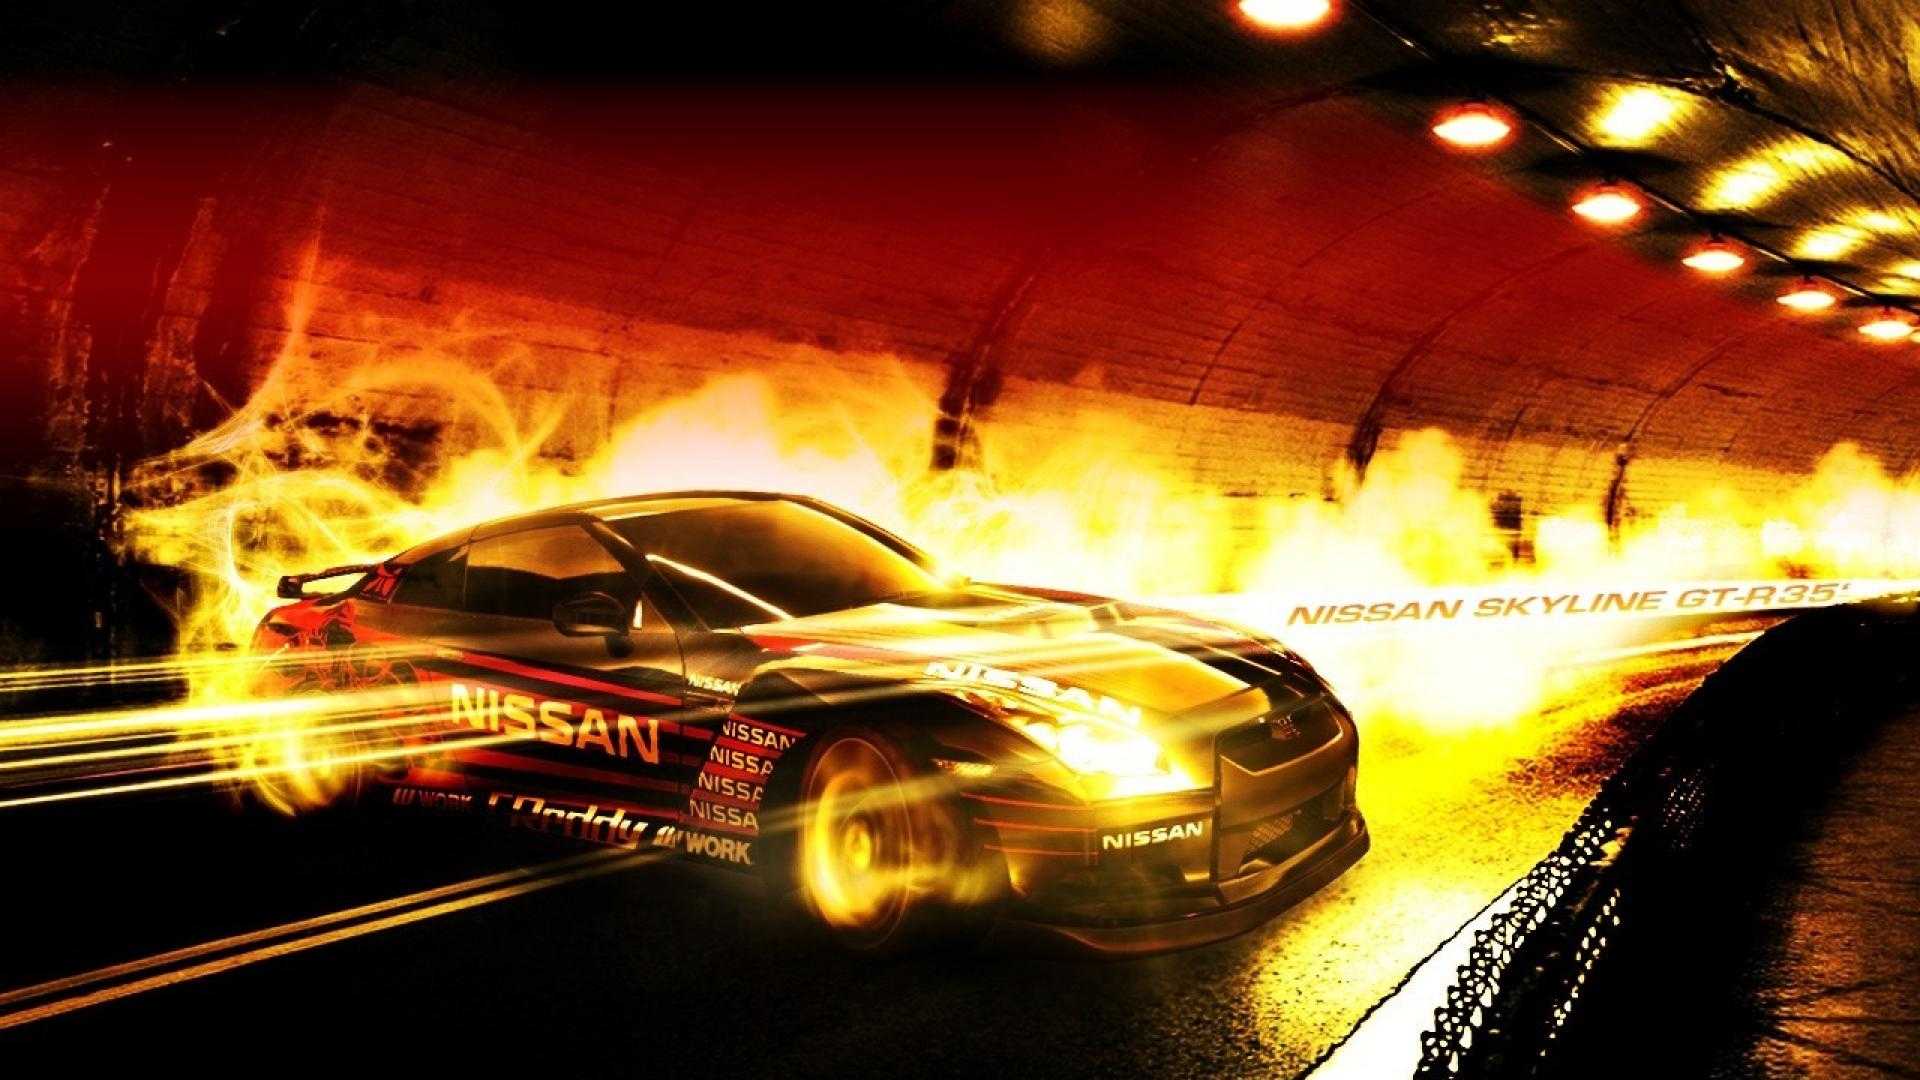 Car on Fire Wallpaper - KoLPaPer - Awesome Free HD Wallpapers